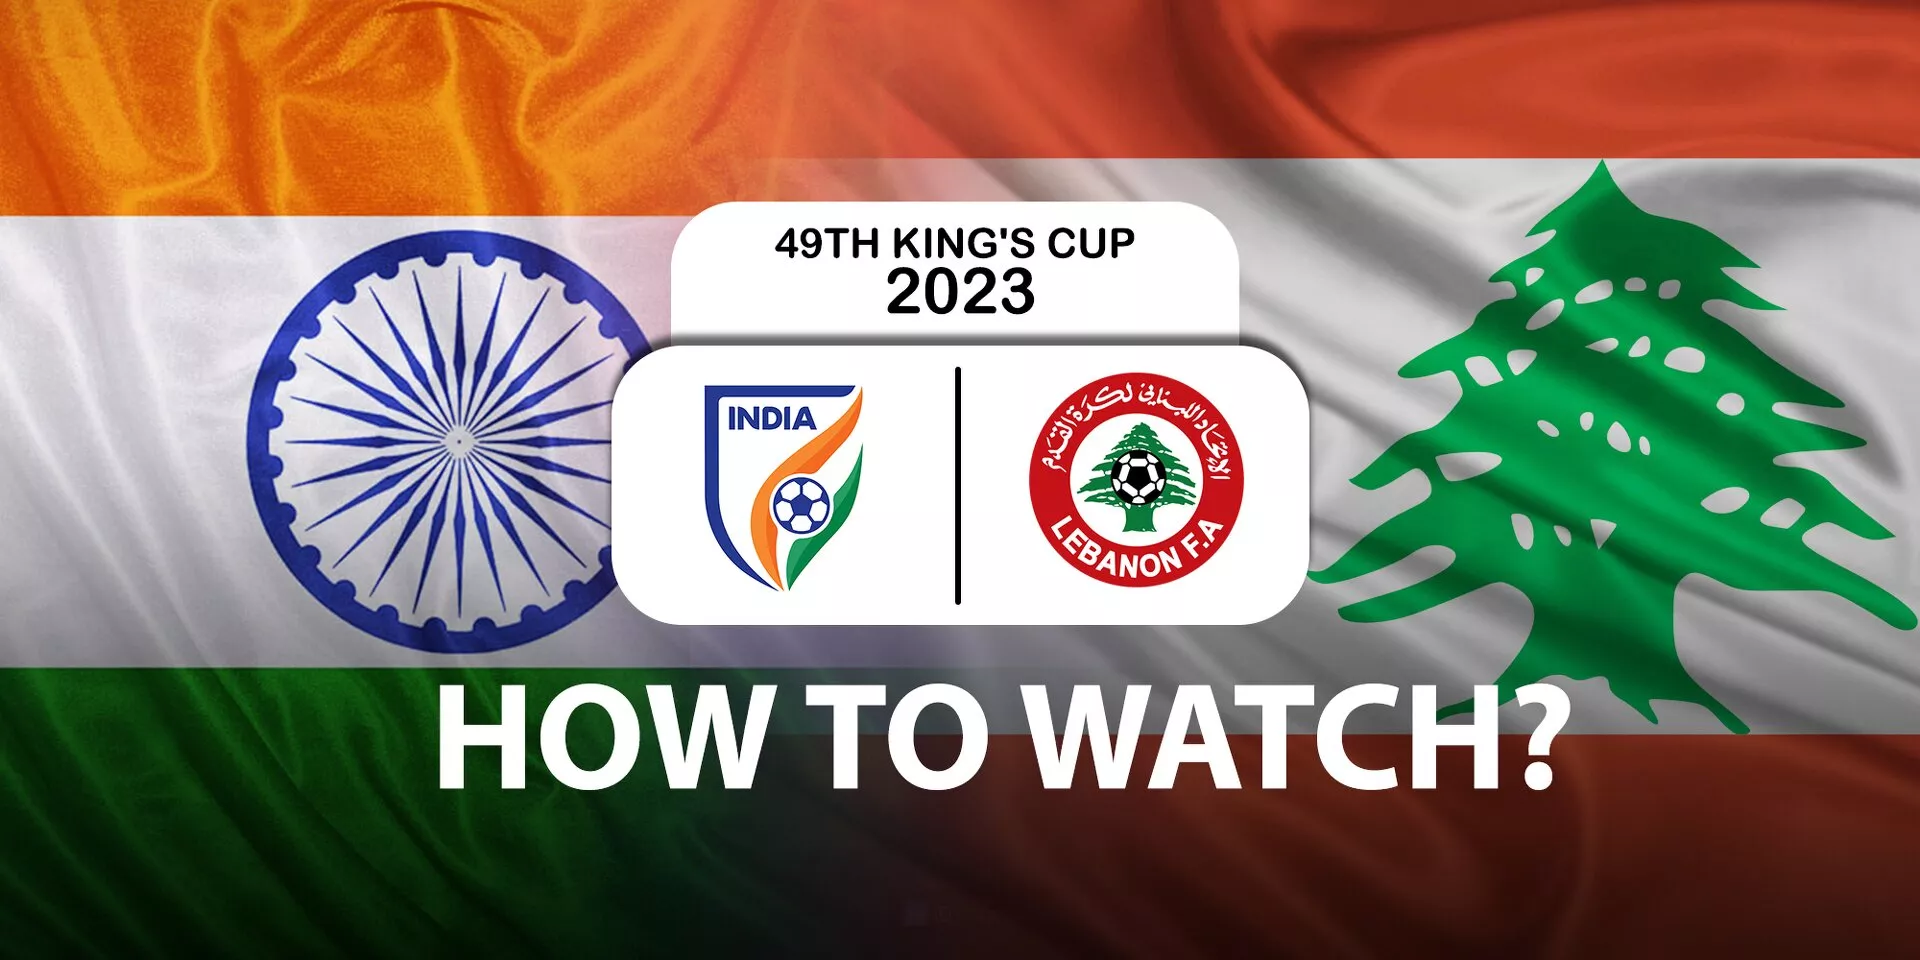 India vs Lebanon King's Cup 2023 telecast live stream details